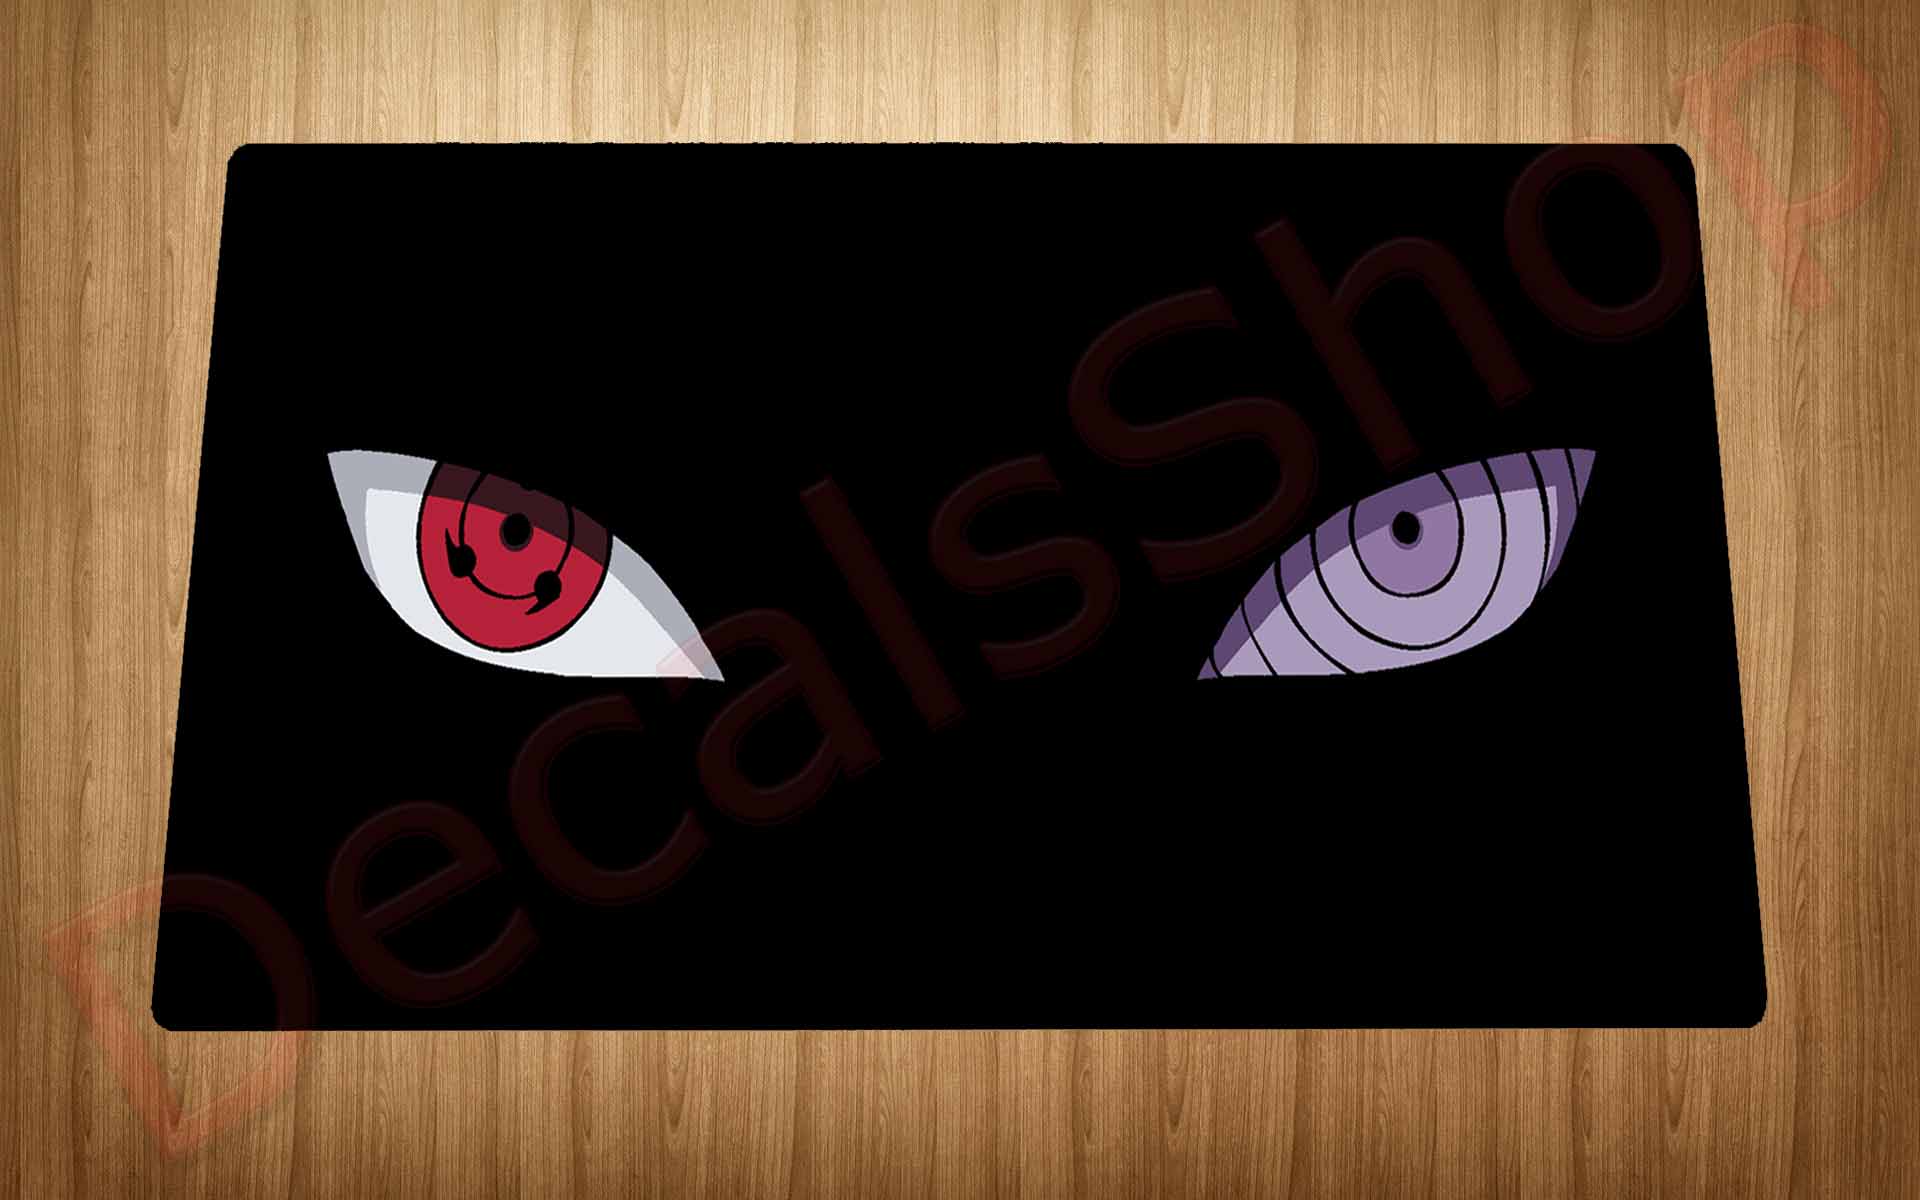 Sharingan Eye Stickers for Sale